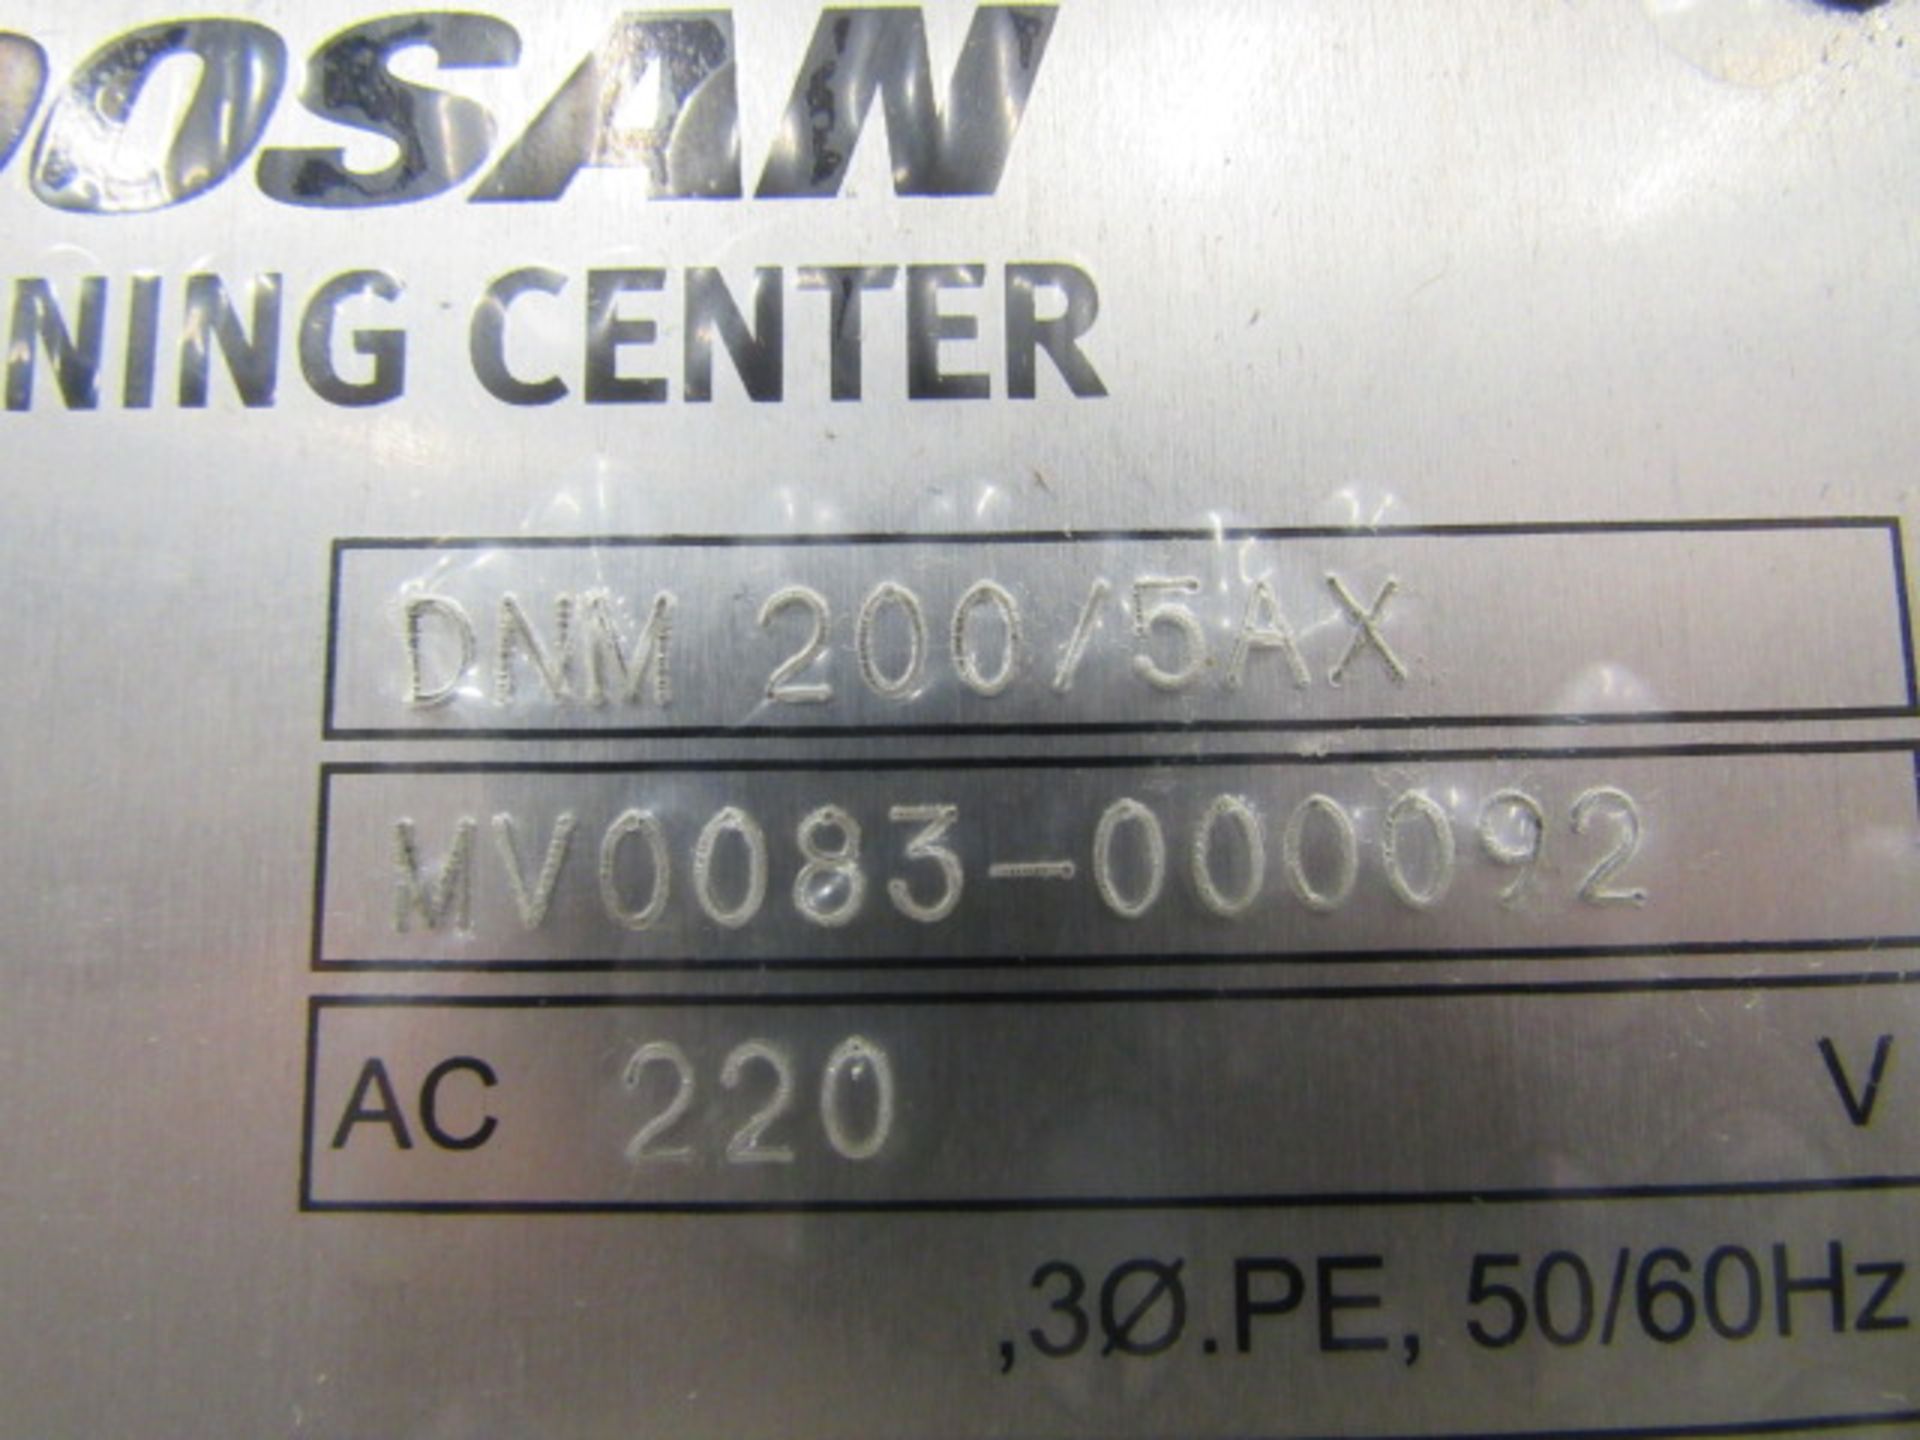 Doosan DNM200/5AX 5-Axis CNC Vertical Machining Center - Image 9 of 9